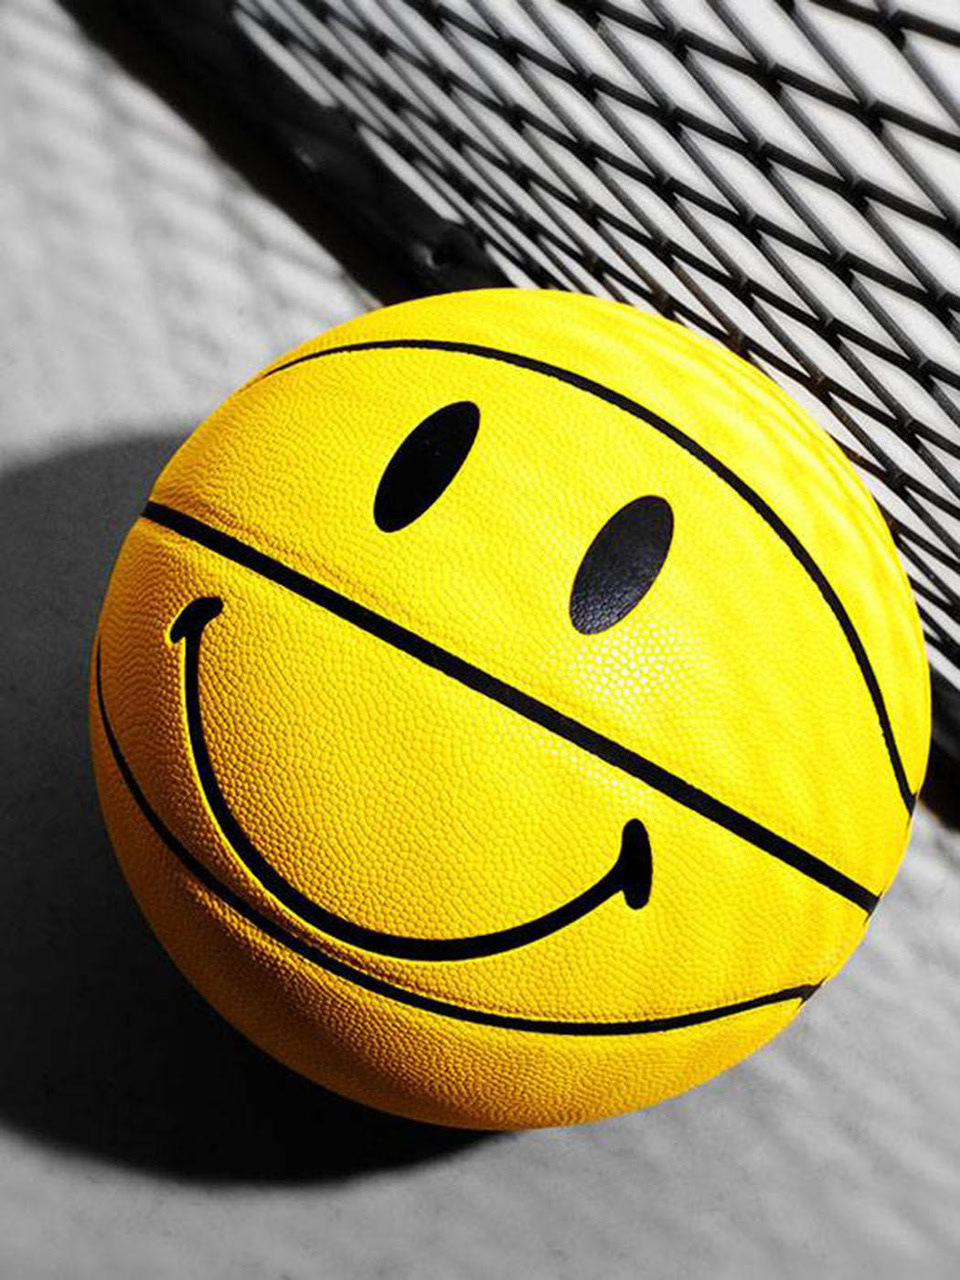 CHINATOWN MARKET YOHO限定版 人气笑脸篮球 黄色